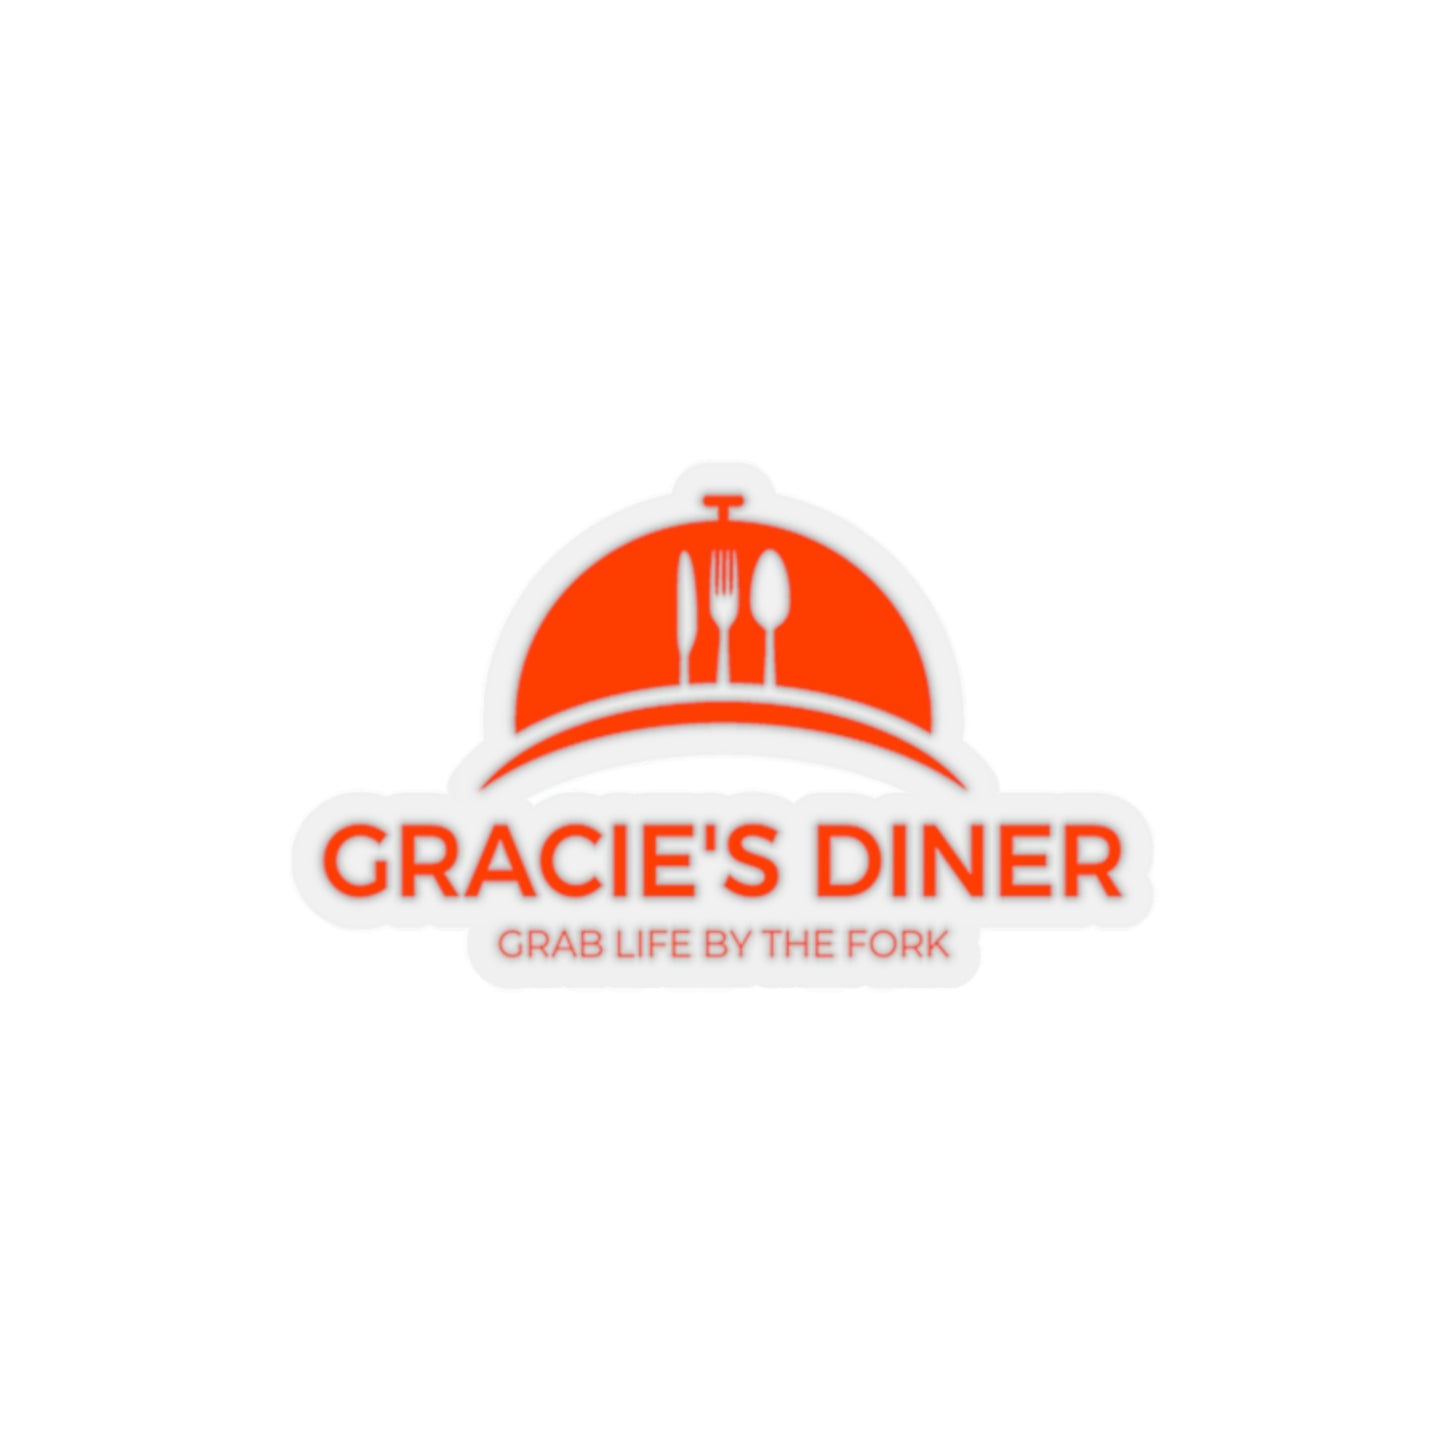 Gracie's Diner Kiss-Cut Stickers